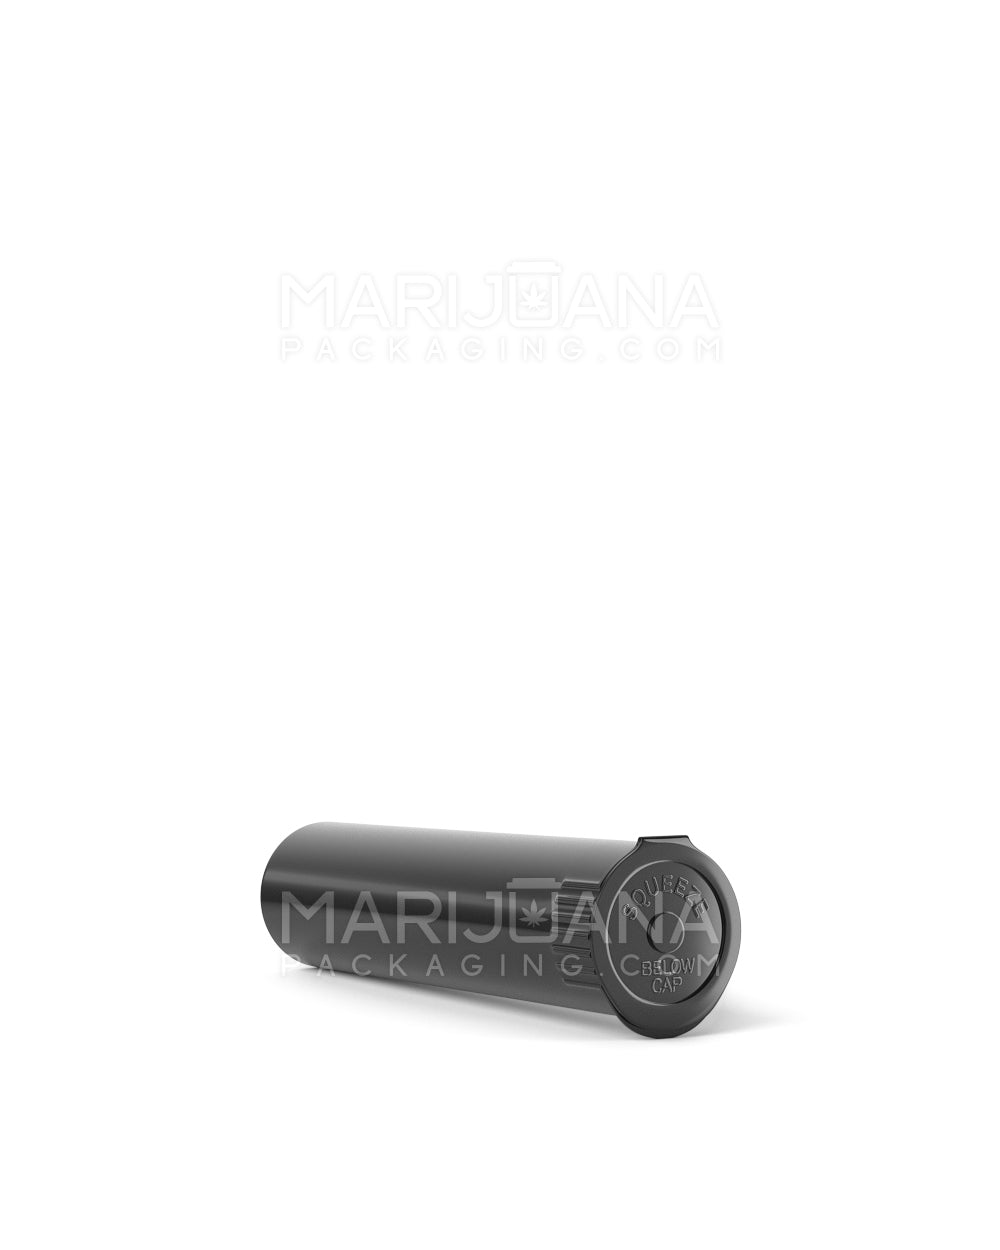 Child Resistant | Pop Top Opaque Plastic Pre-Roll Tubes | 78mm - Black - 1200 Count